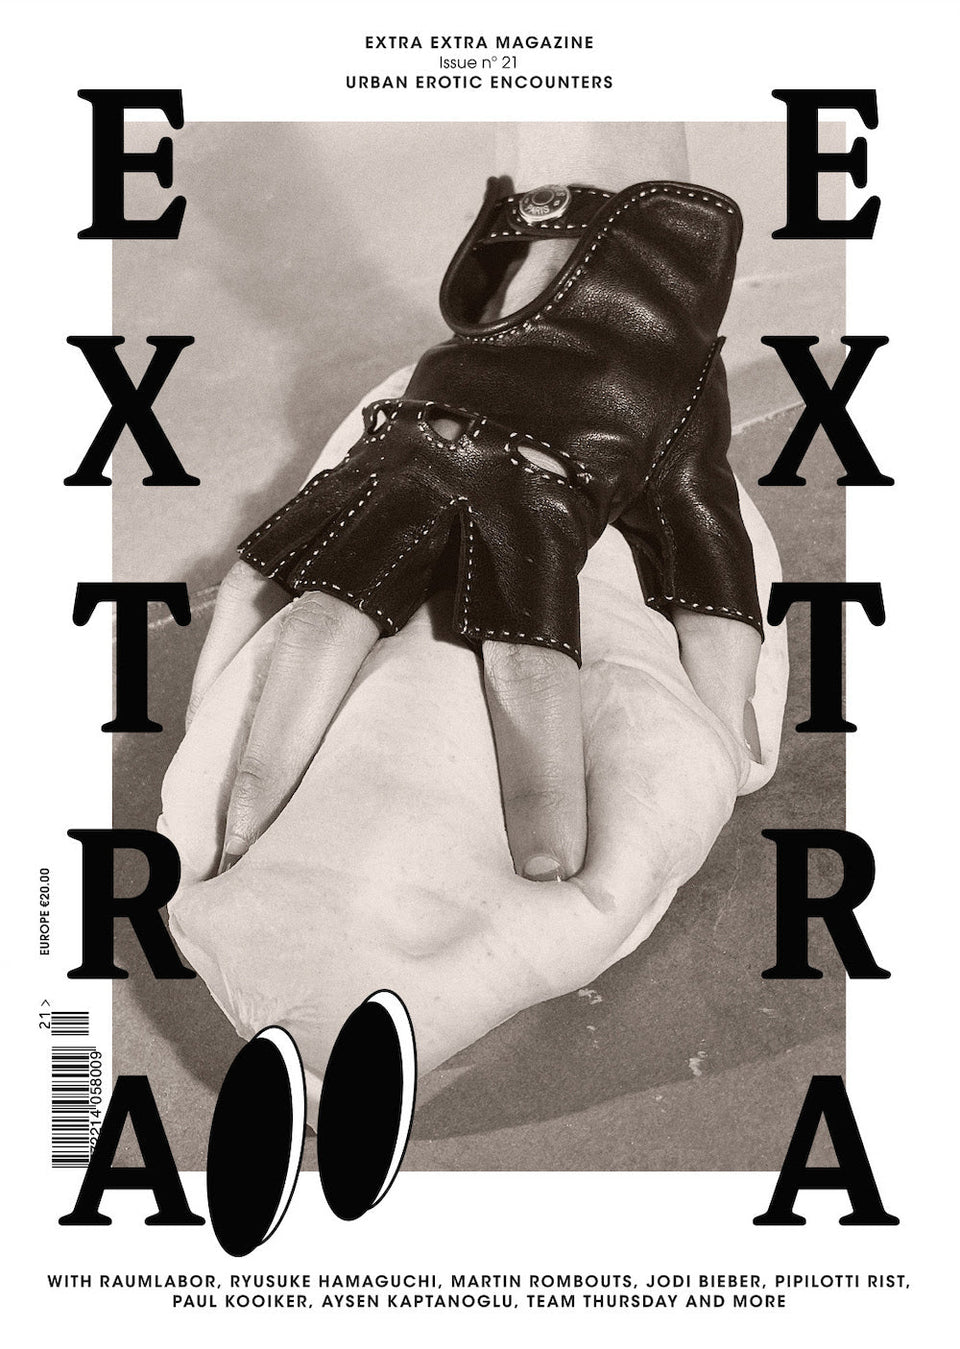 Extra Extra: Issue 21, Urban Erotic Encounters - ExtraExtra_21_1200x1686_2bfb767c-318b-4c6e-8d78-01f097db4179